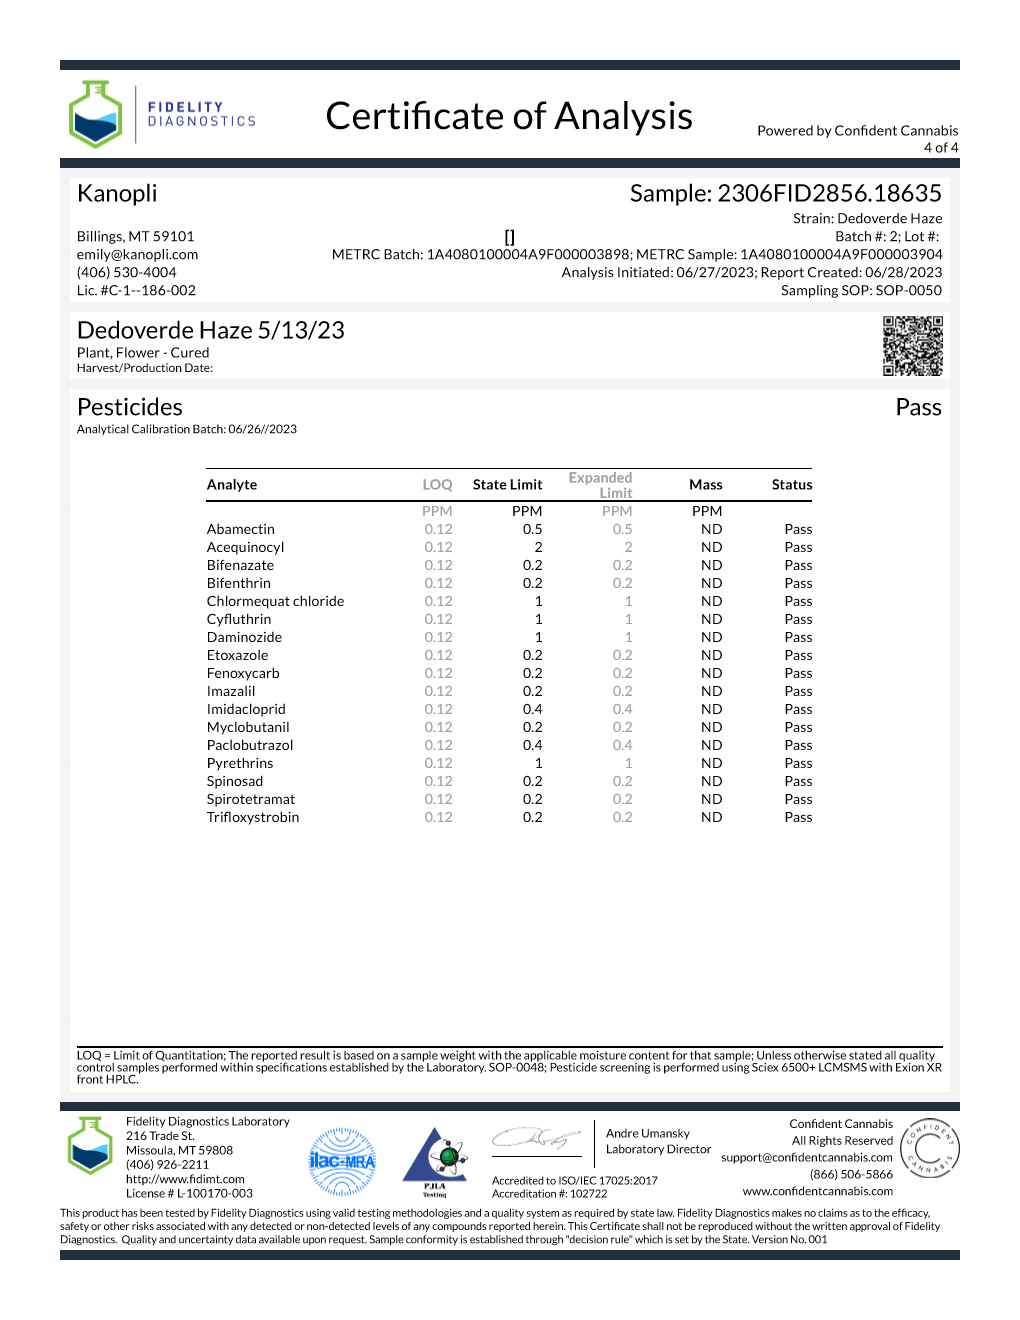 Dedoverde Haze shake (31.73% THC) May 2023